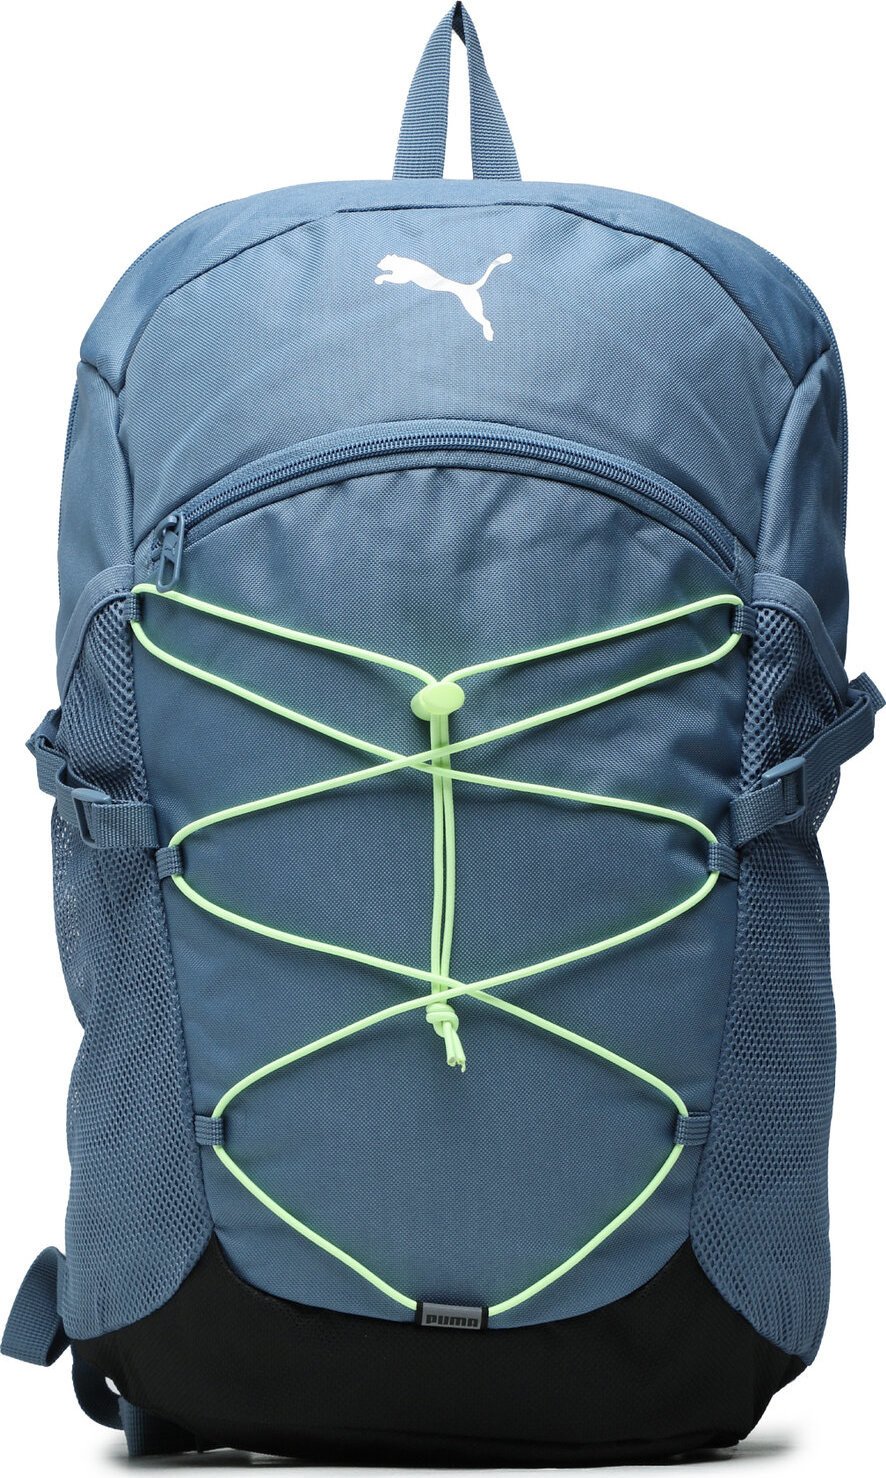 Batoh Puma Plus Pro Backpack 079521 02 Deep Dive